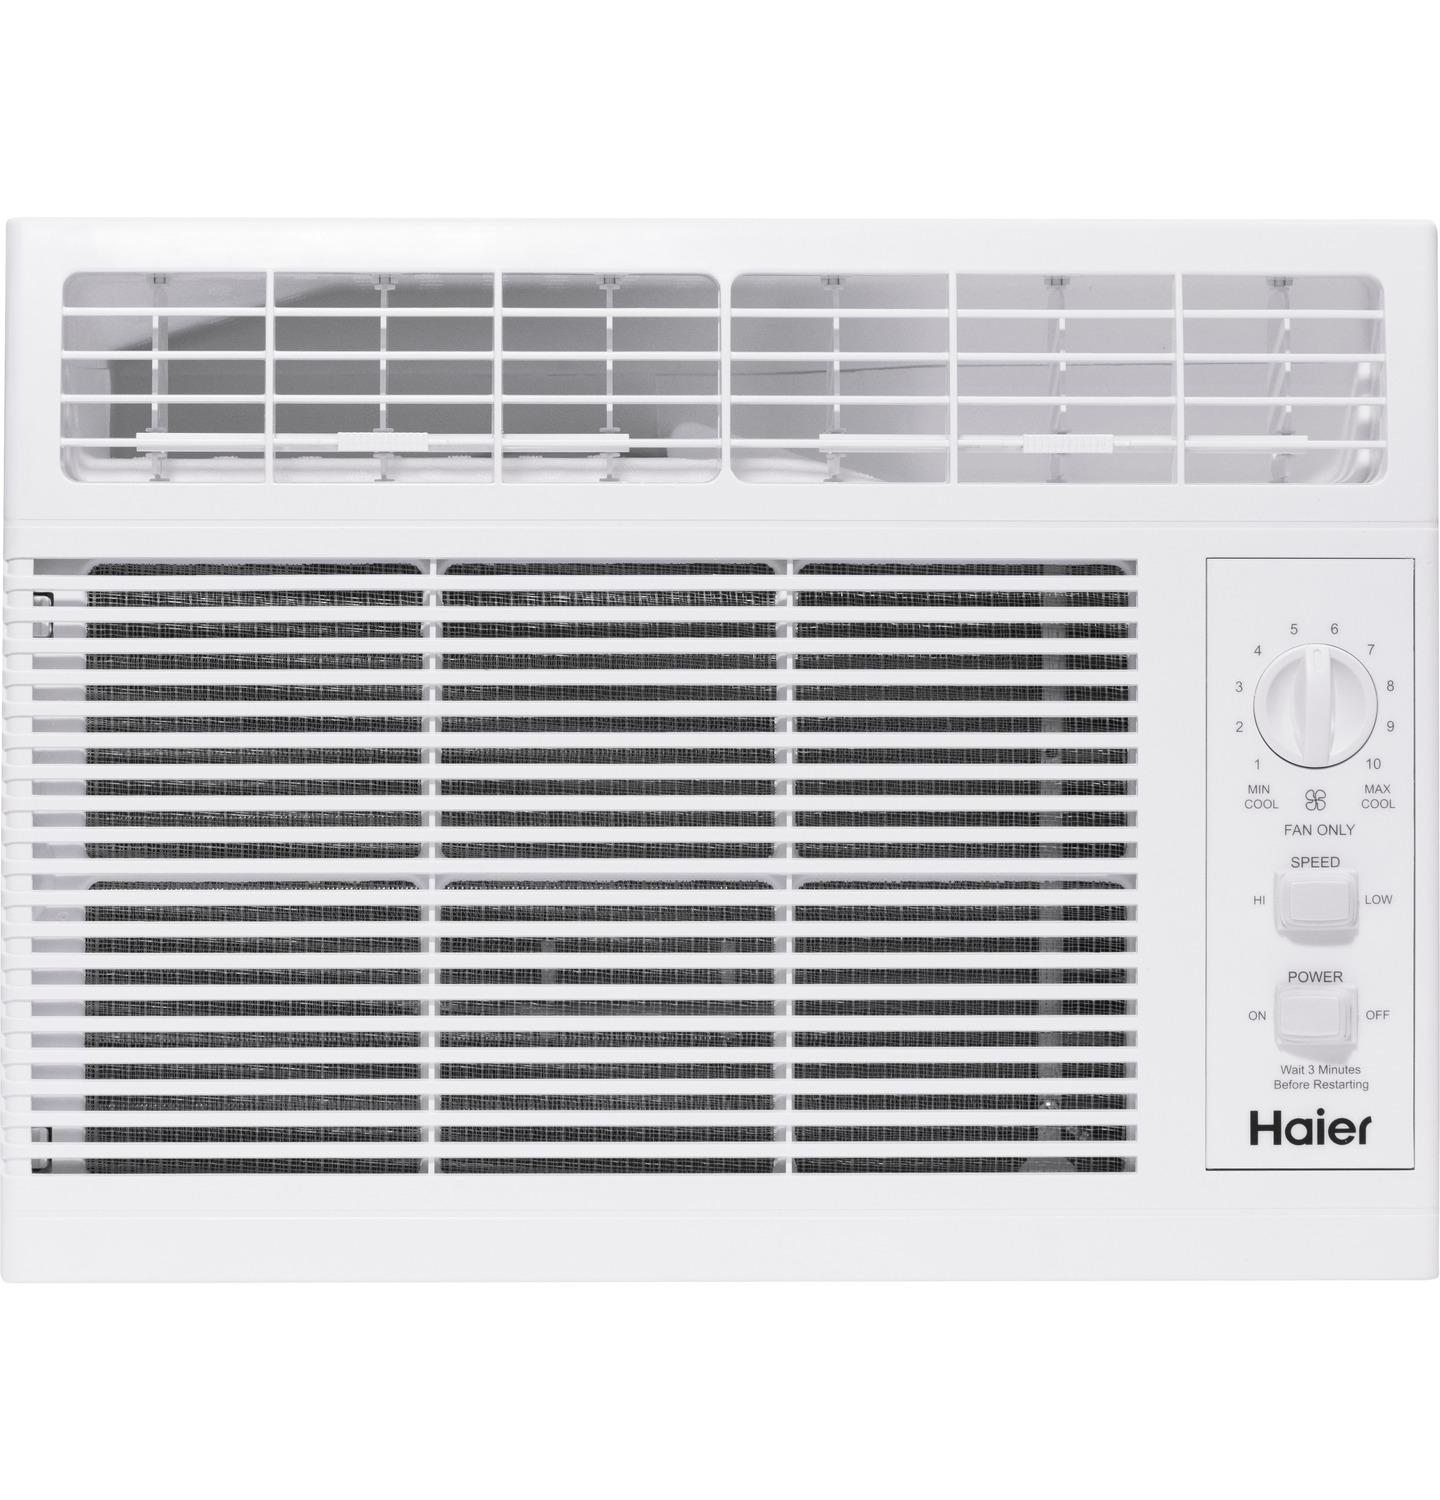 115 Volt Room Air Conditioner